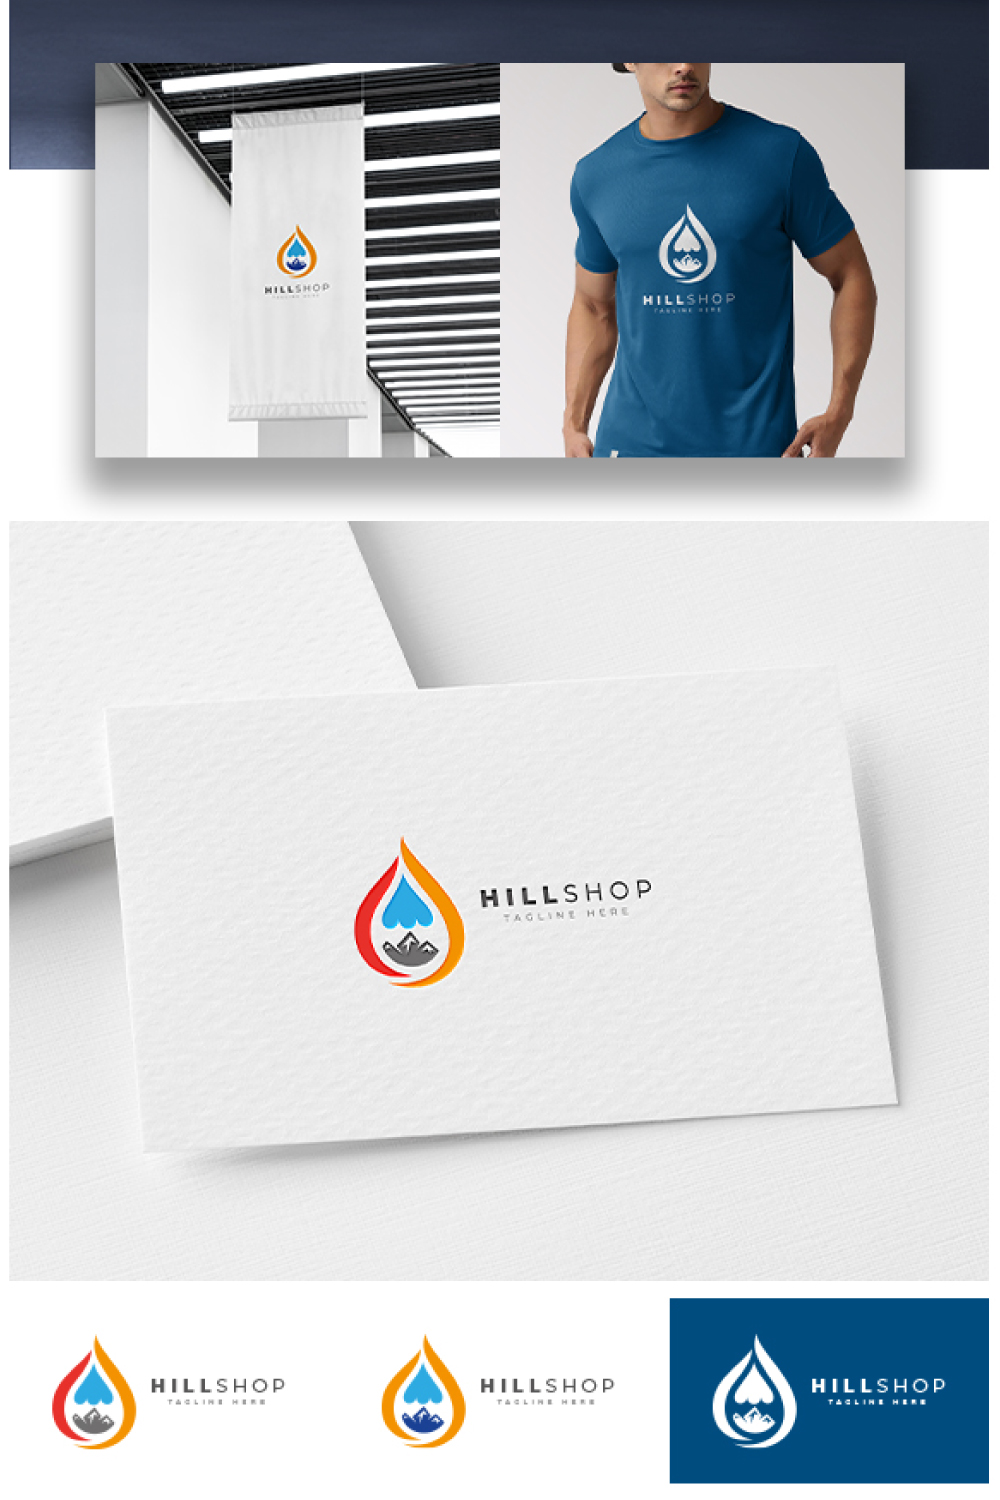 Hillshop Logo pinterest preview image.